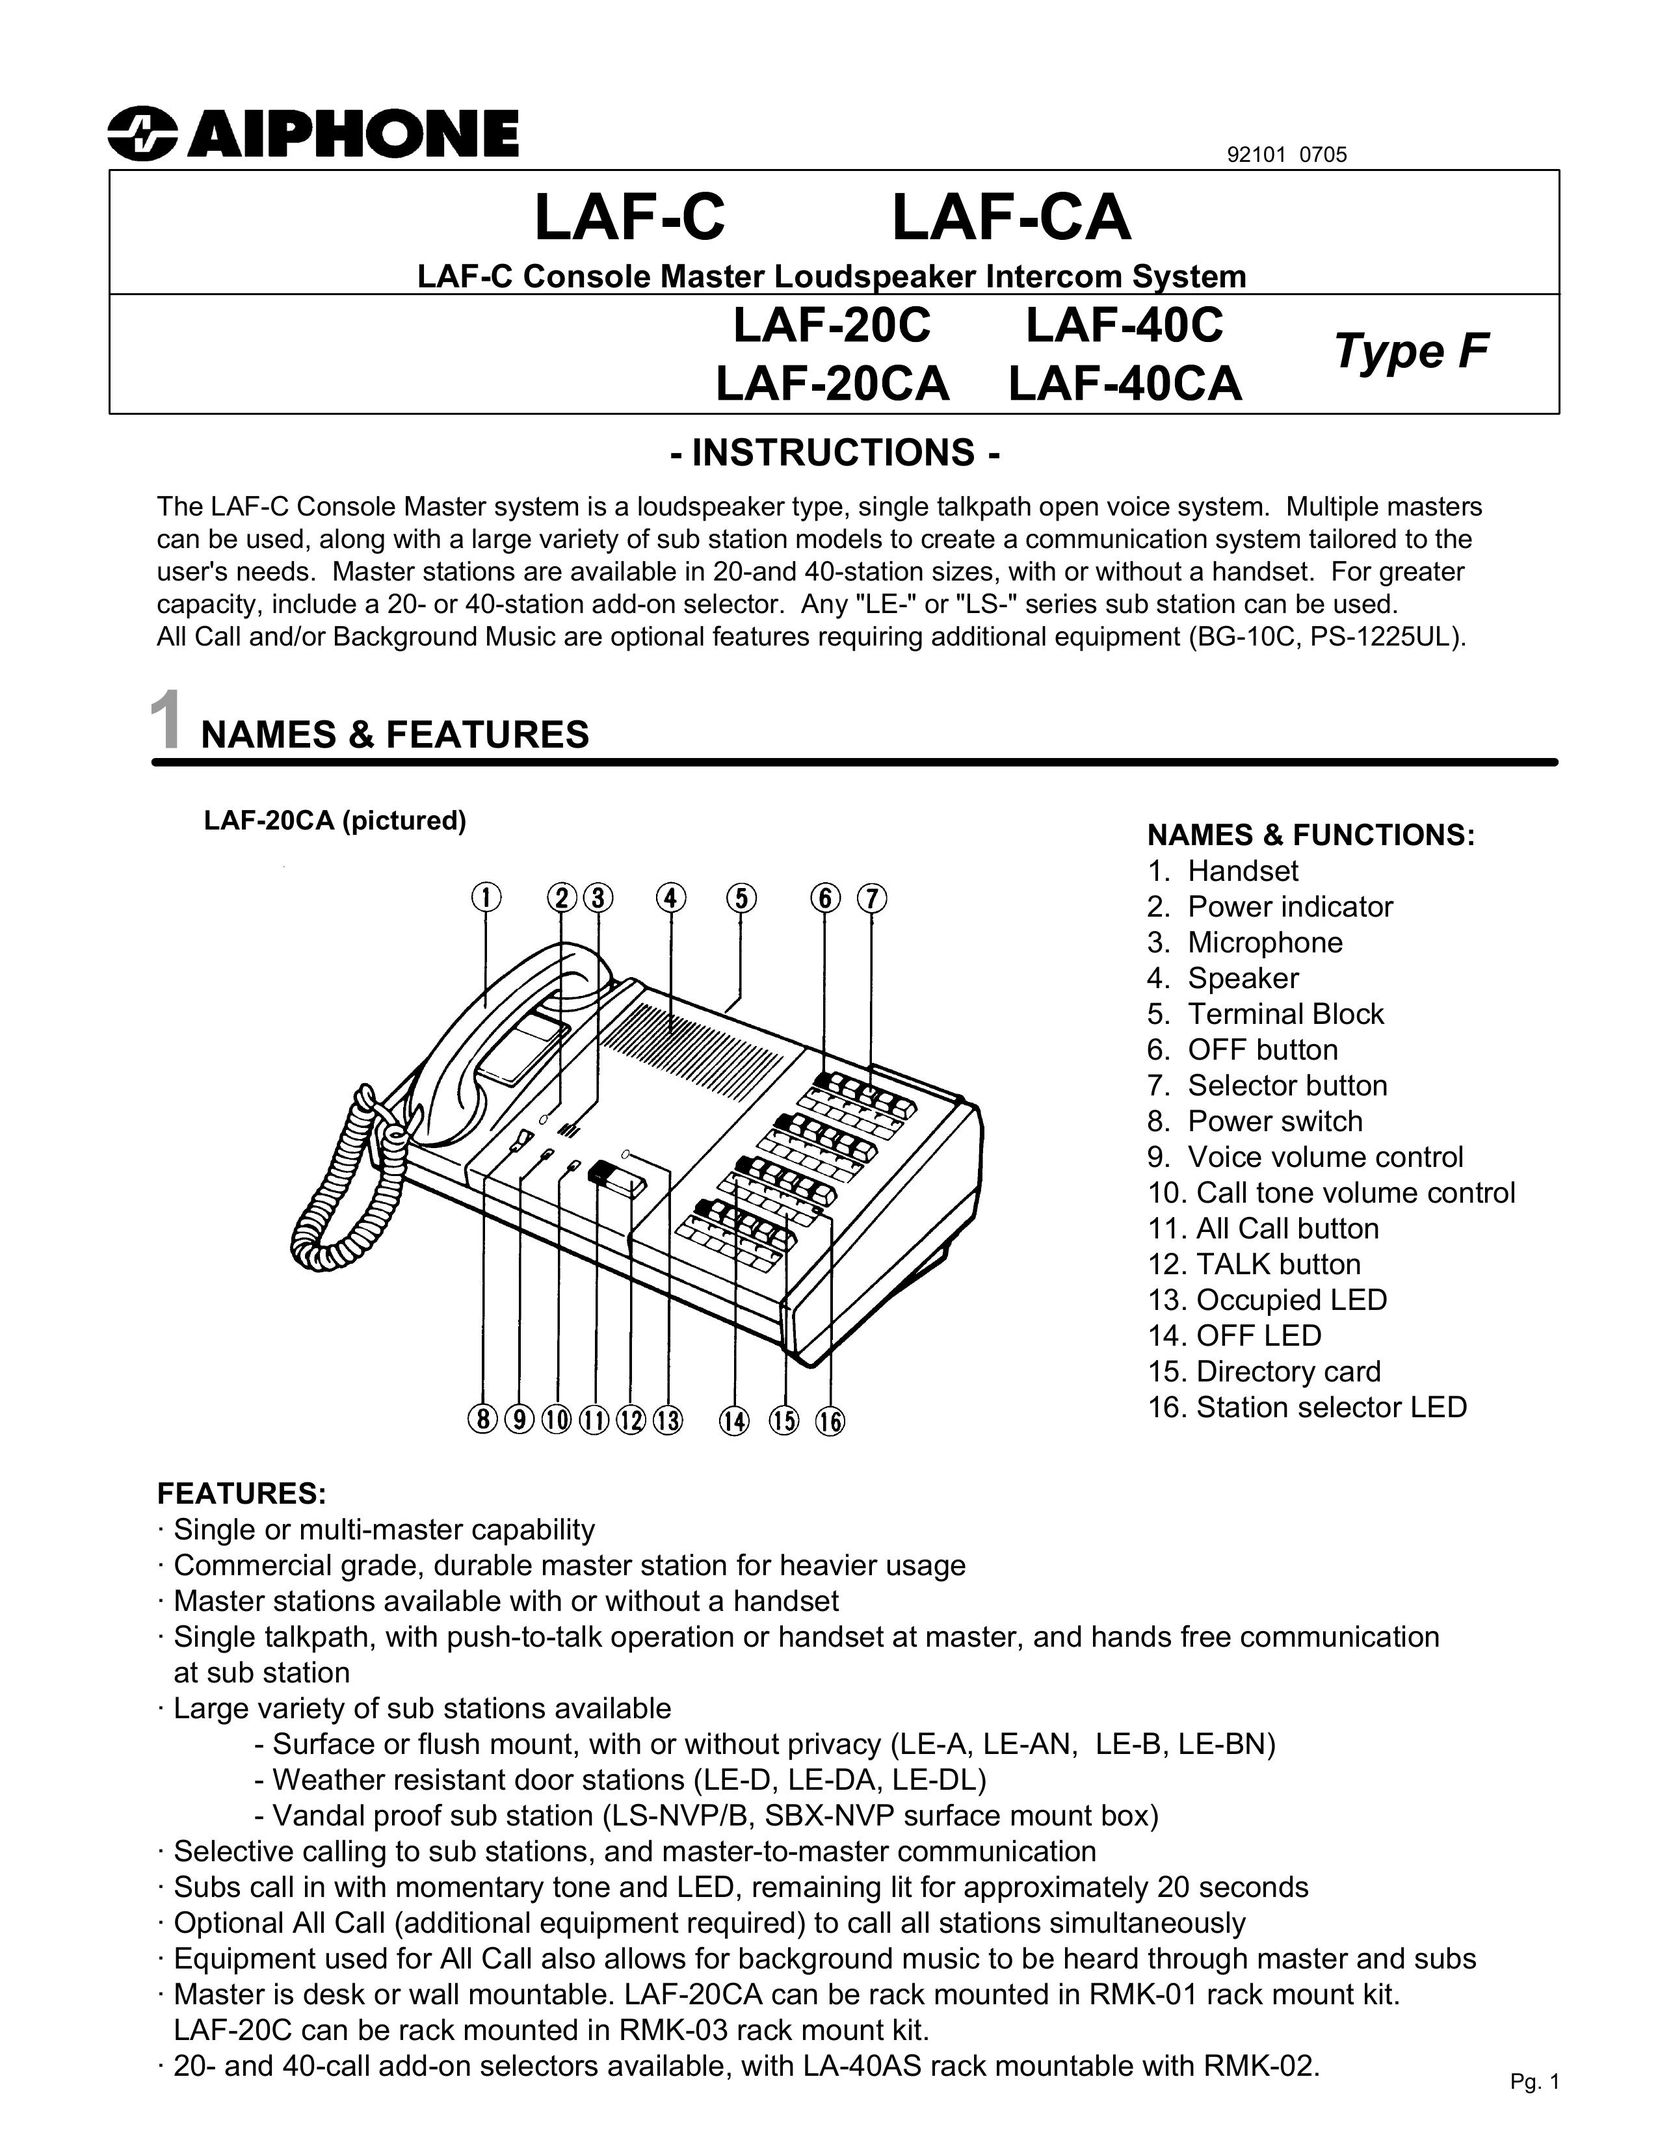 Aiphone LAF-20CA Answering Machine User Manual